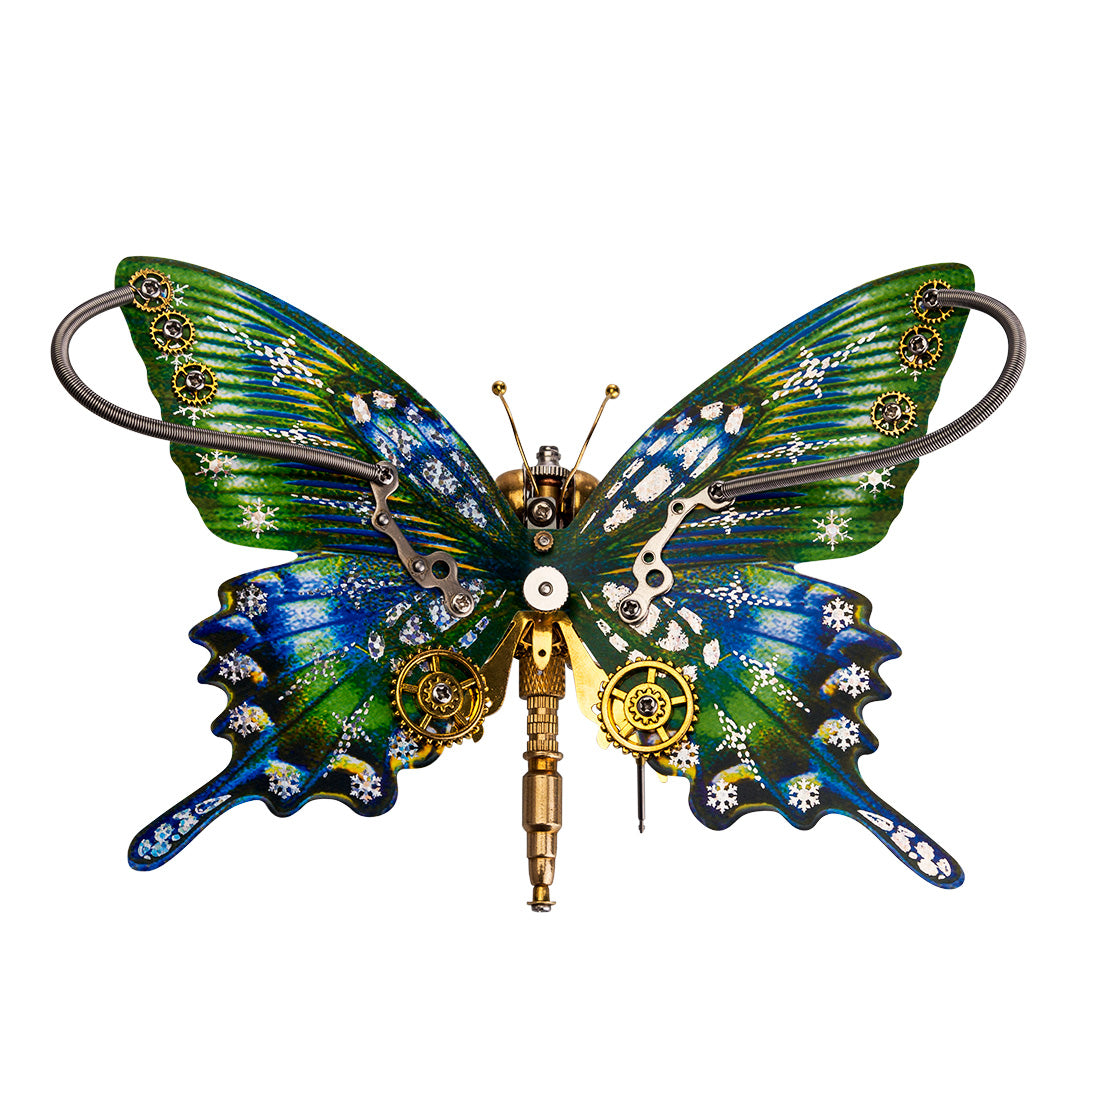 Steampunk Butterfly Alpine Black Swallowtail Papilio Maackii Model 3D DIY Kit With Flower Base